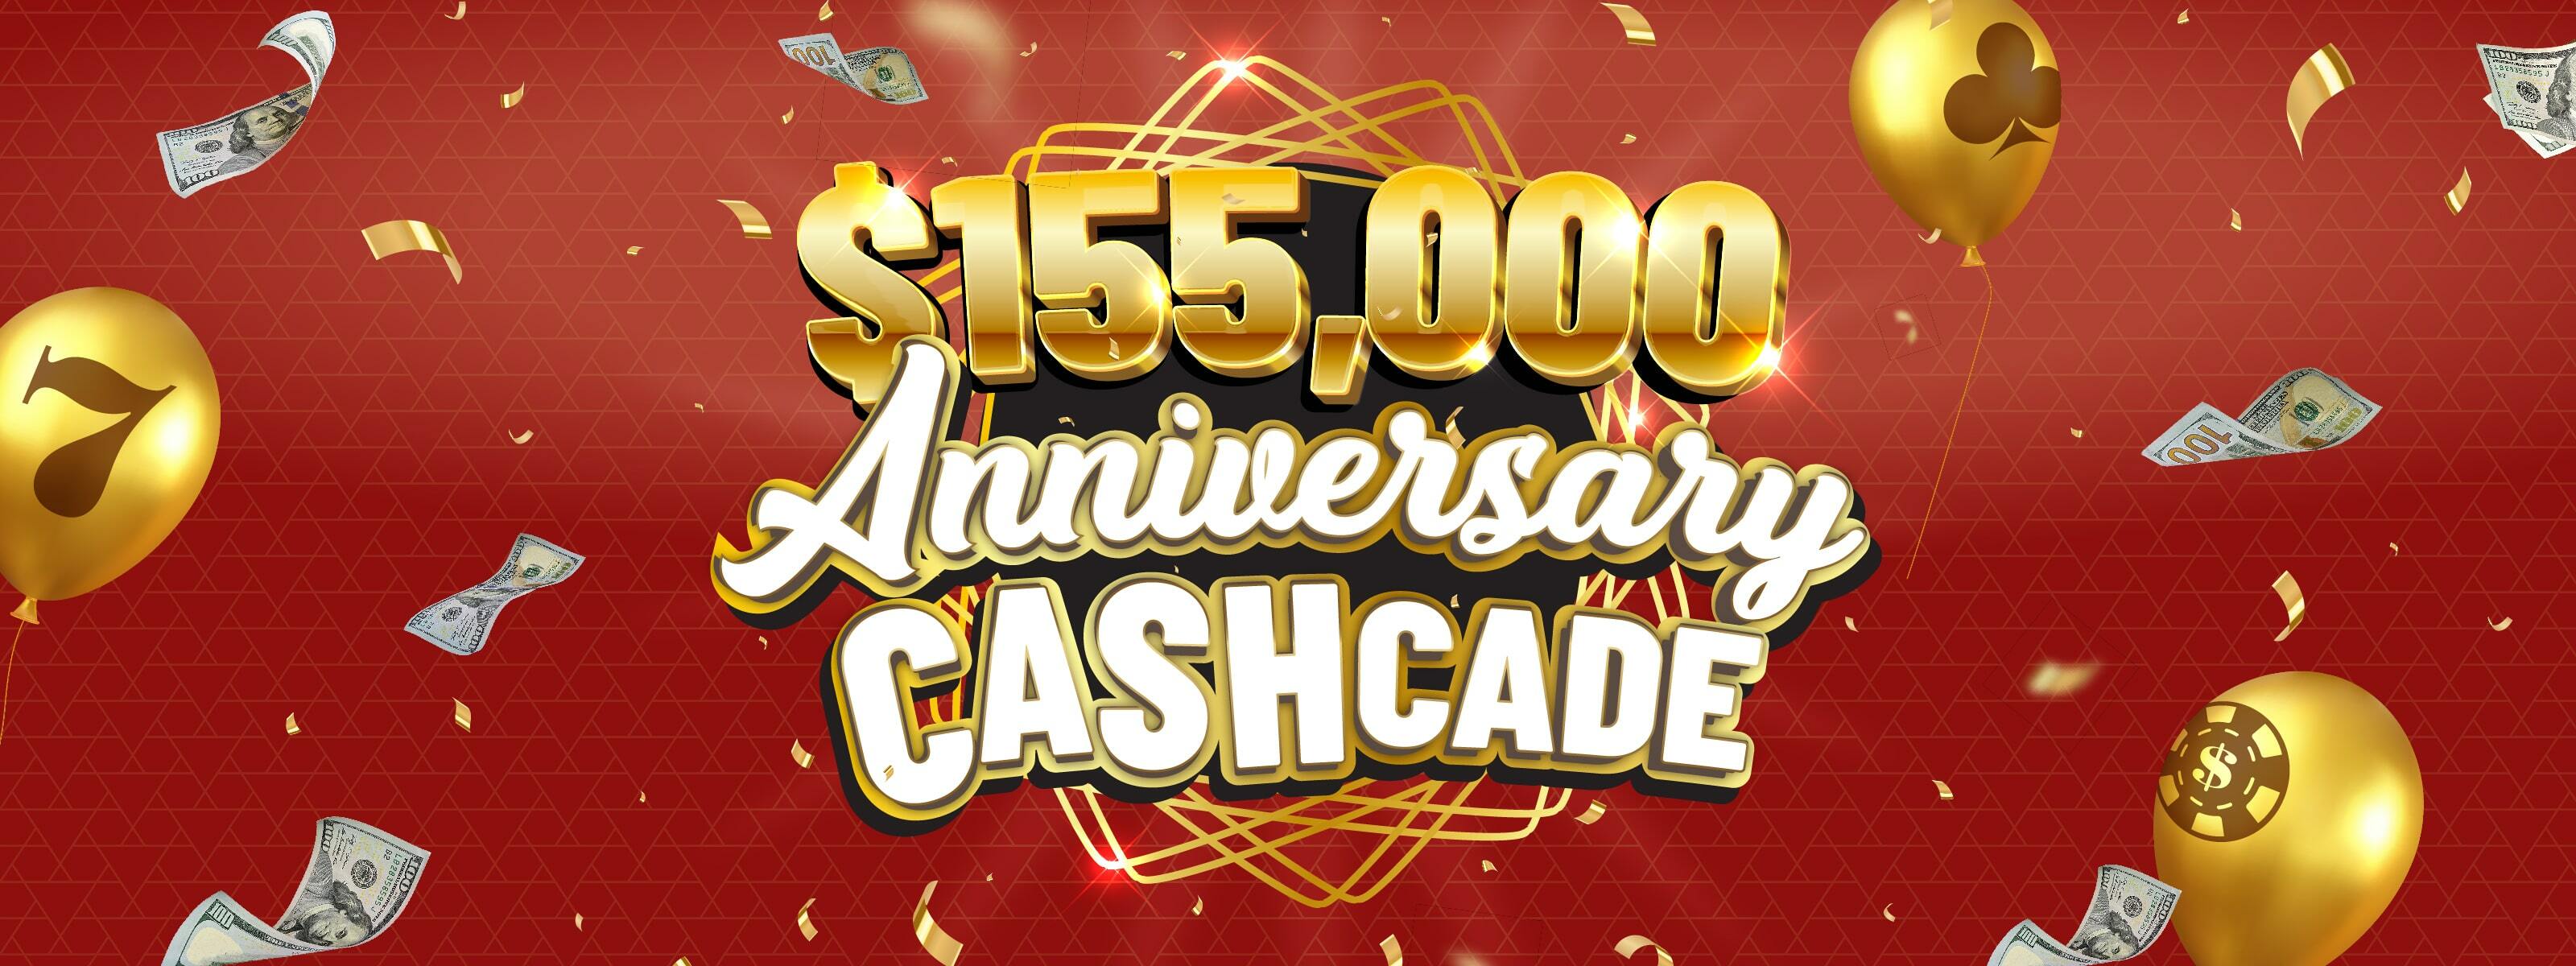 $155,000 Anniversary Cashcade